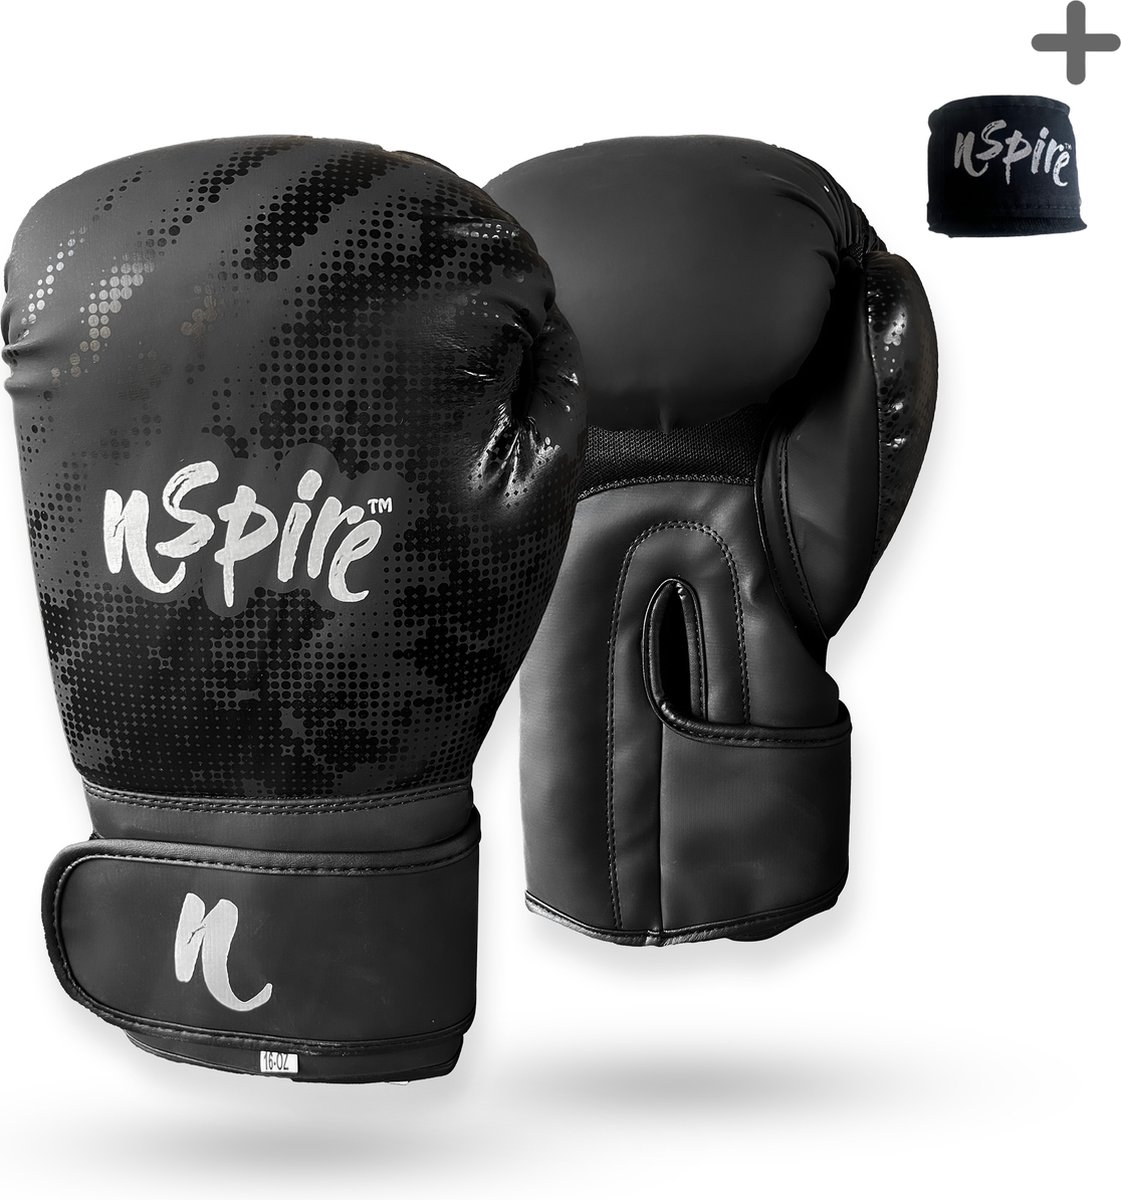 Nspire Sports : (kick) bokshandschoen - plus gratis bandage - zwart 14 oz